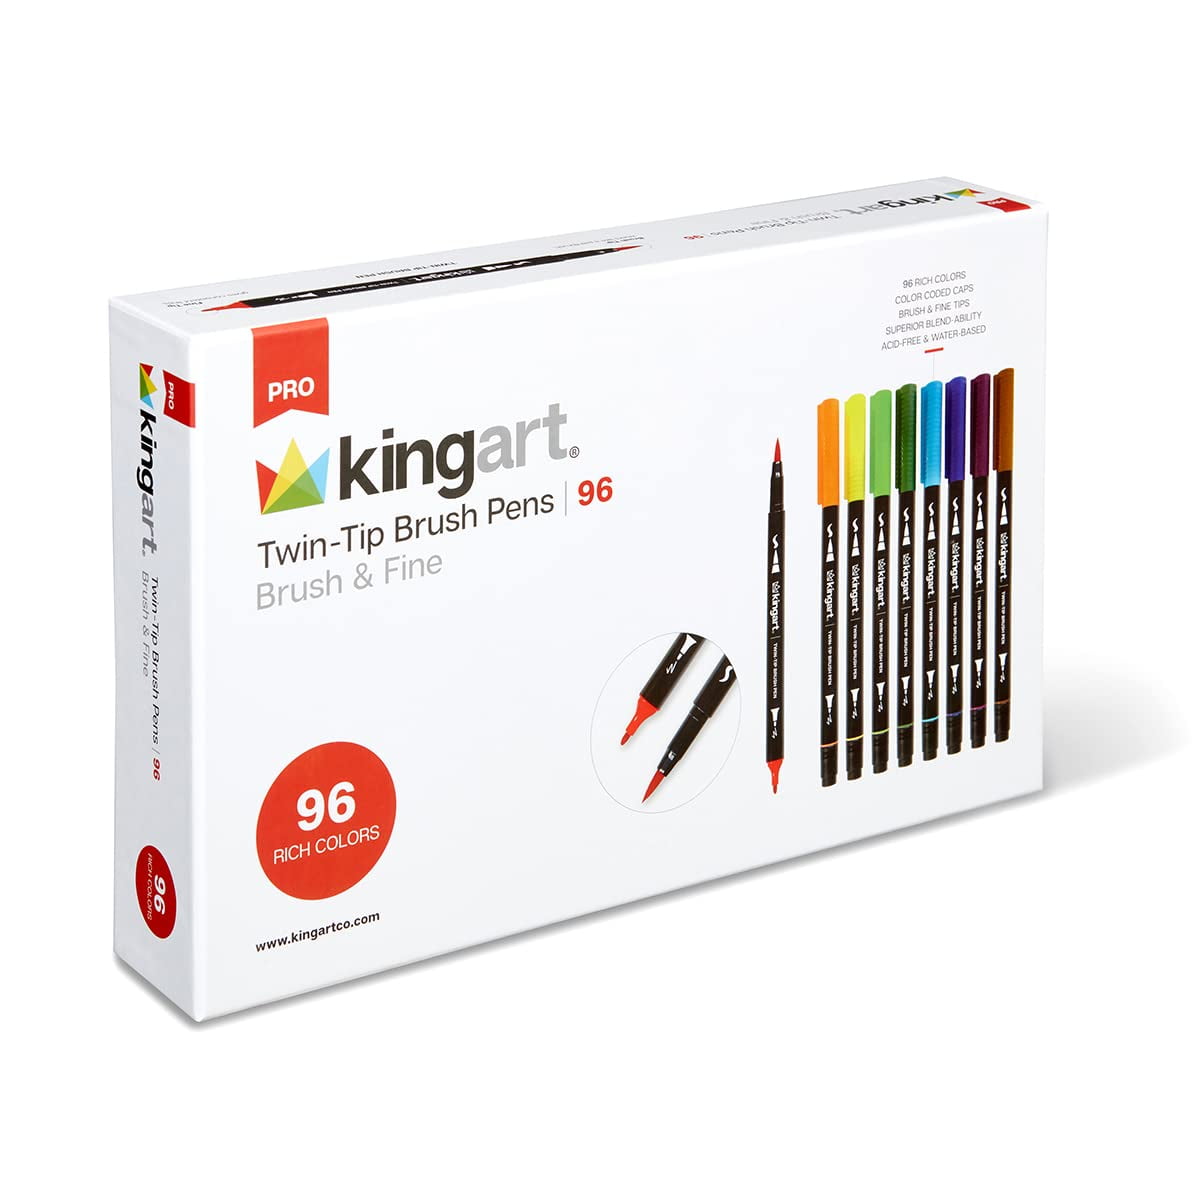 KINGART Twin-Tip Brush Pen Art Markers (Set of 24)